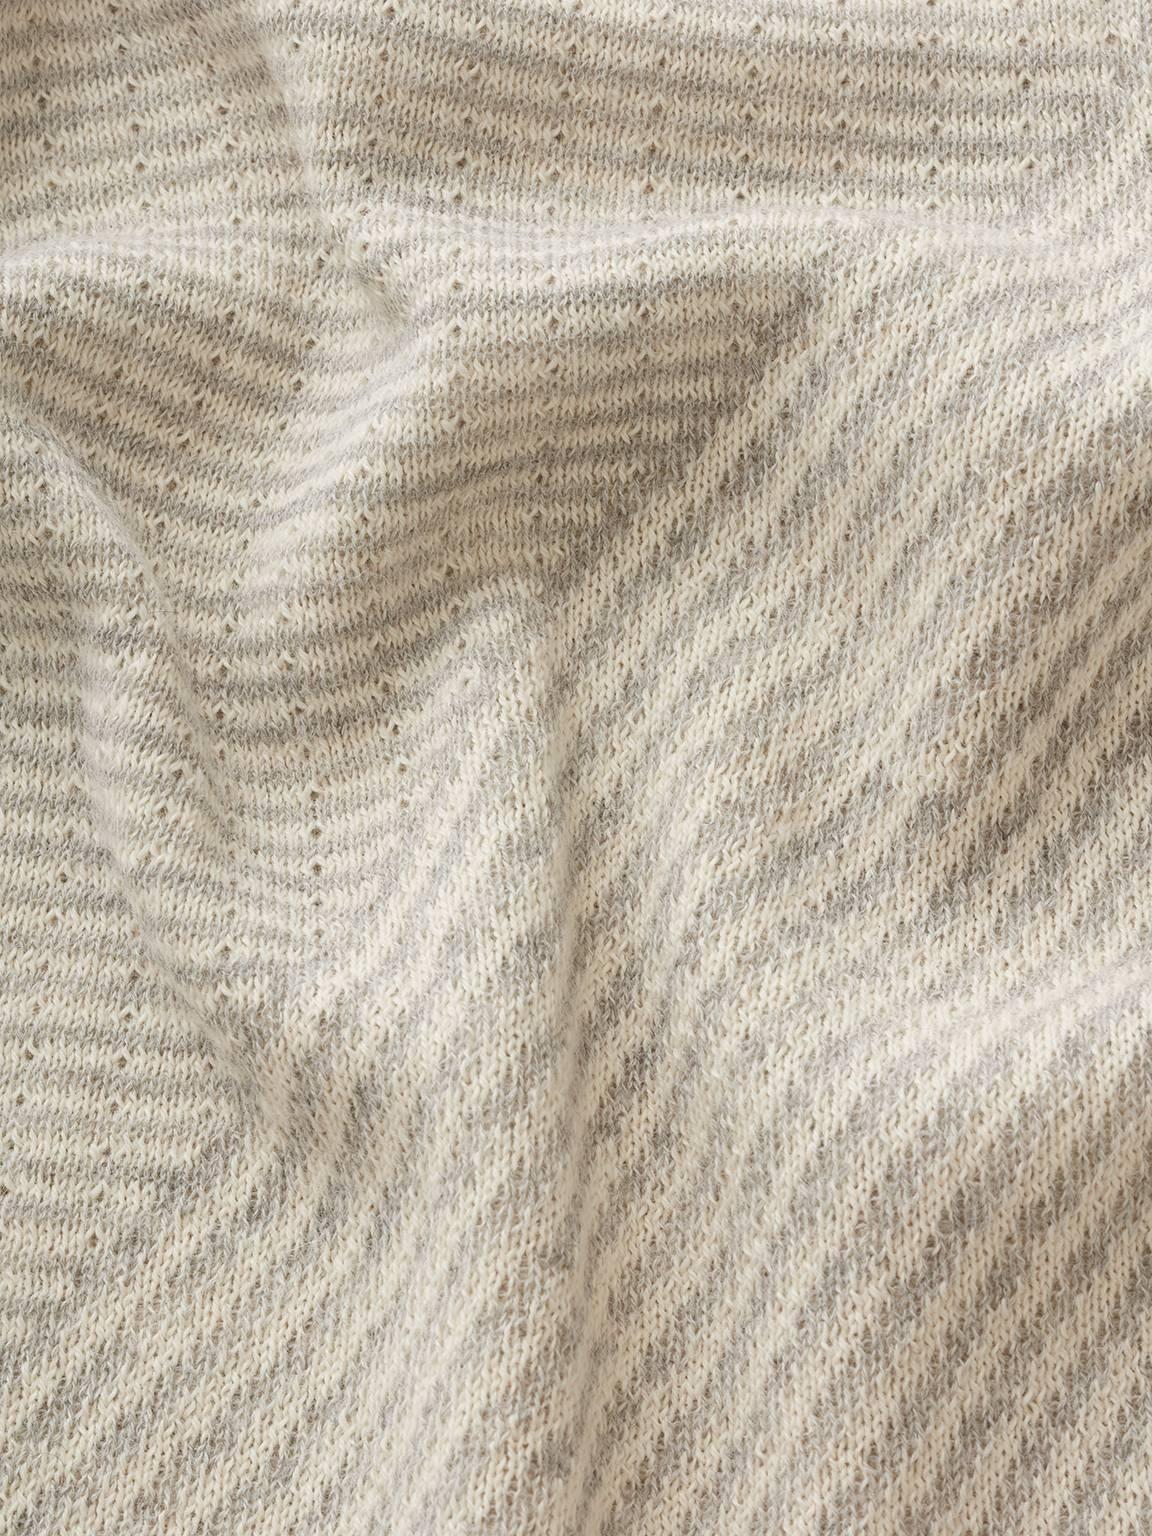 American Handmade 100% Peruvian Baby Alpaca Fina Blanket by Fells/Andes